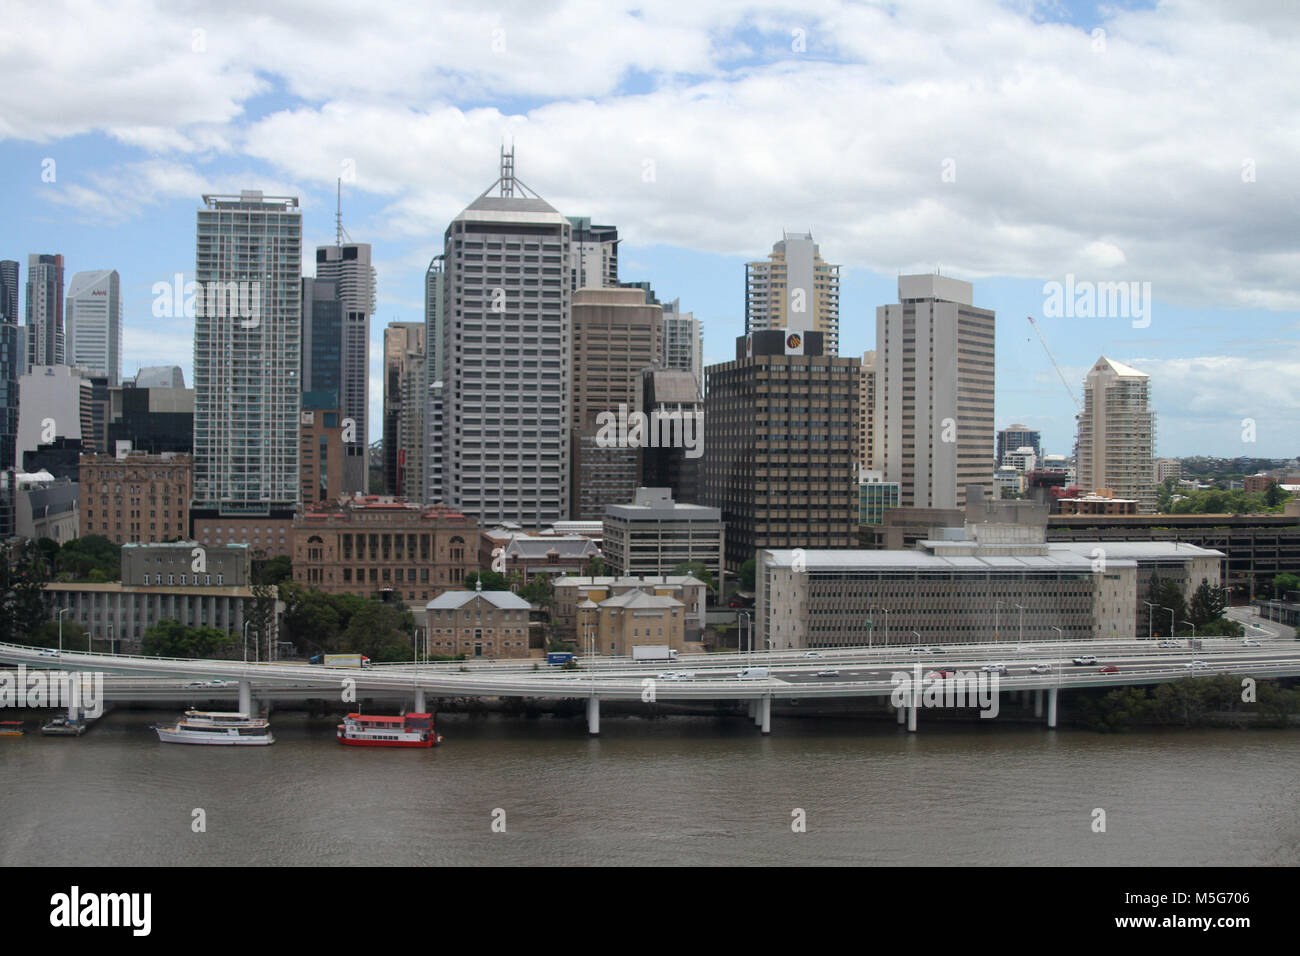 Cityscape of Brisbane CBD with Brisbane River in the foreground, Brisbane, Australia Stock Photo